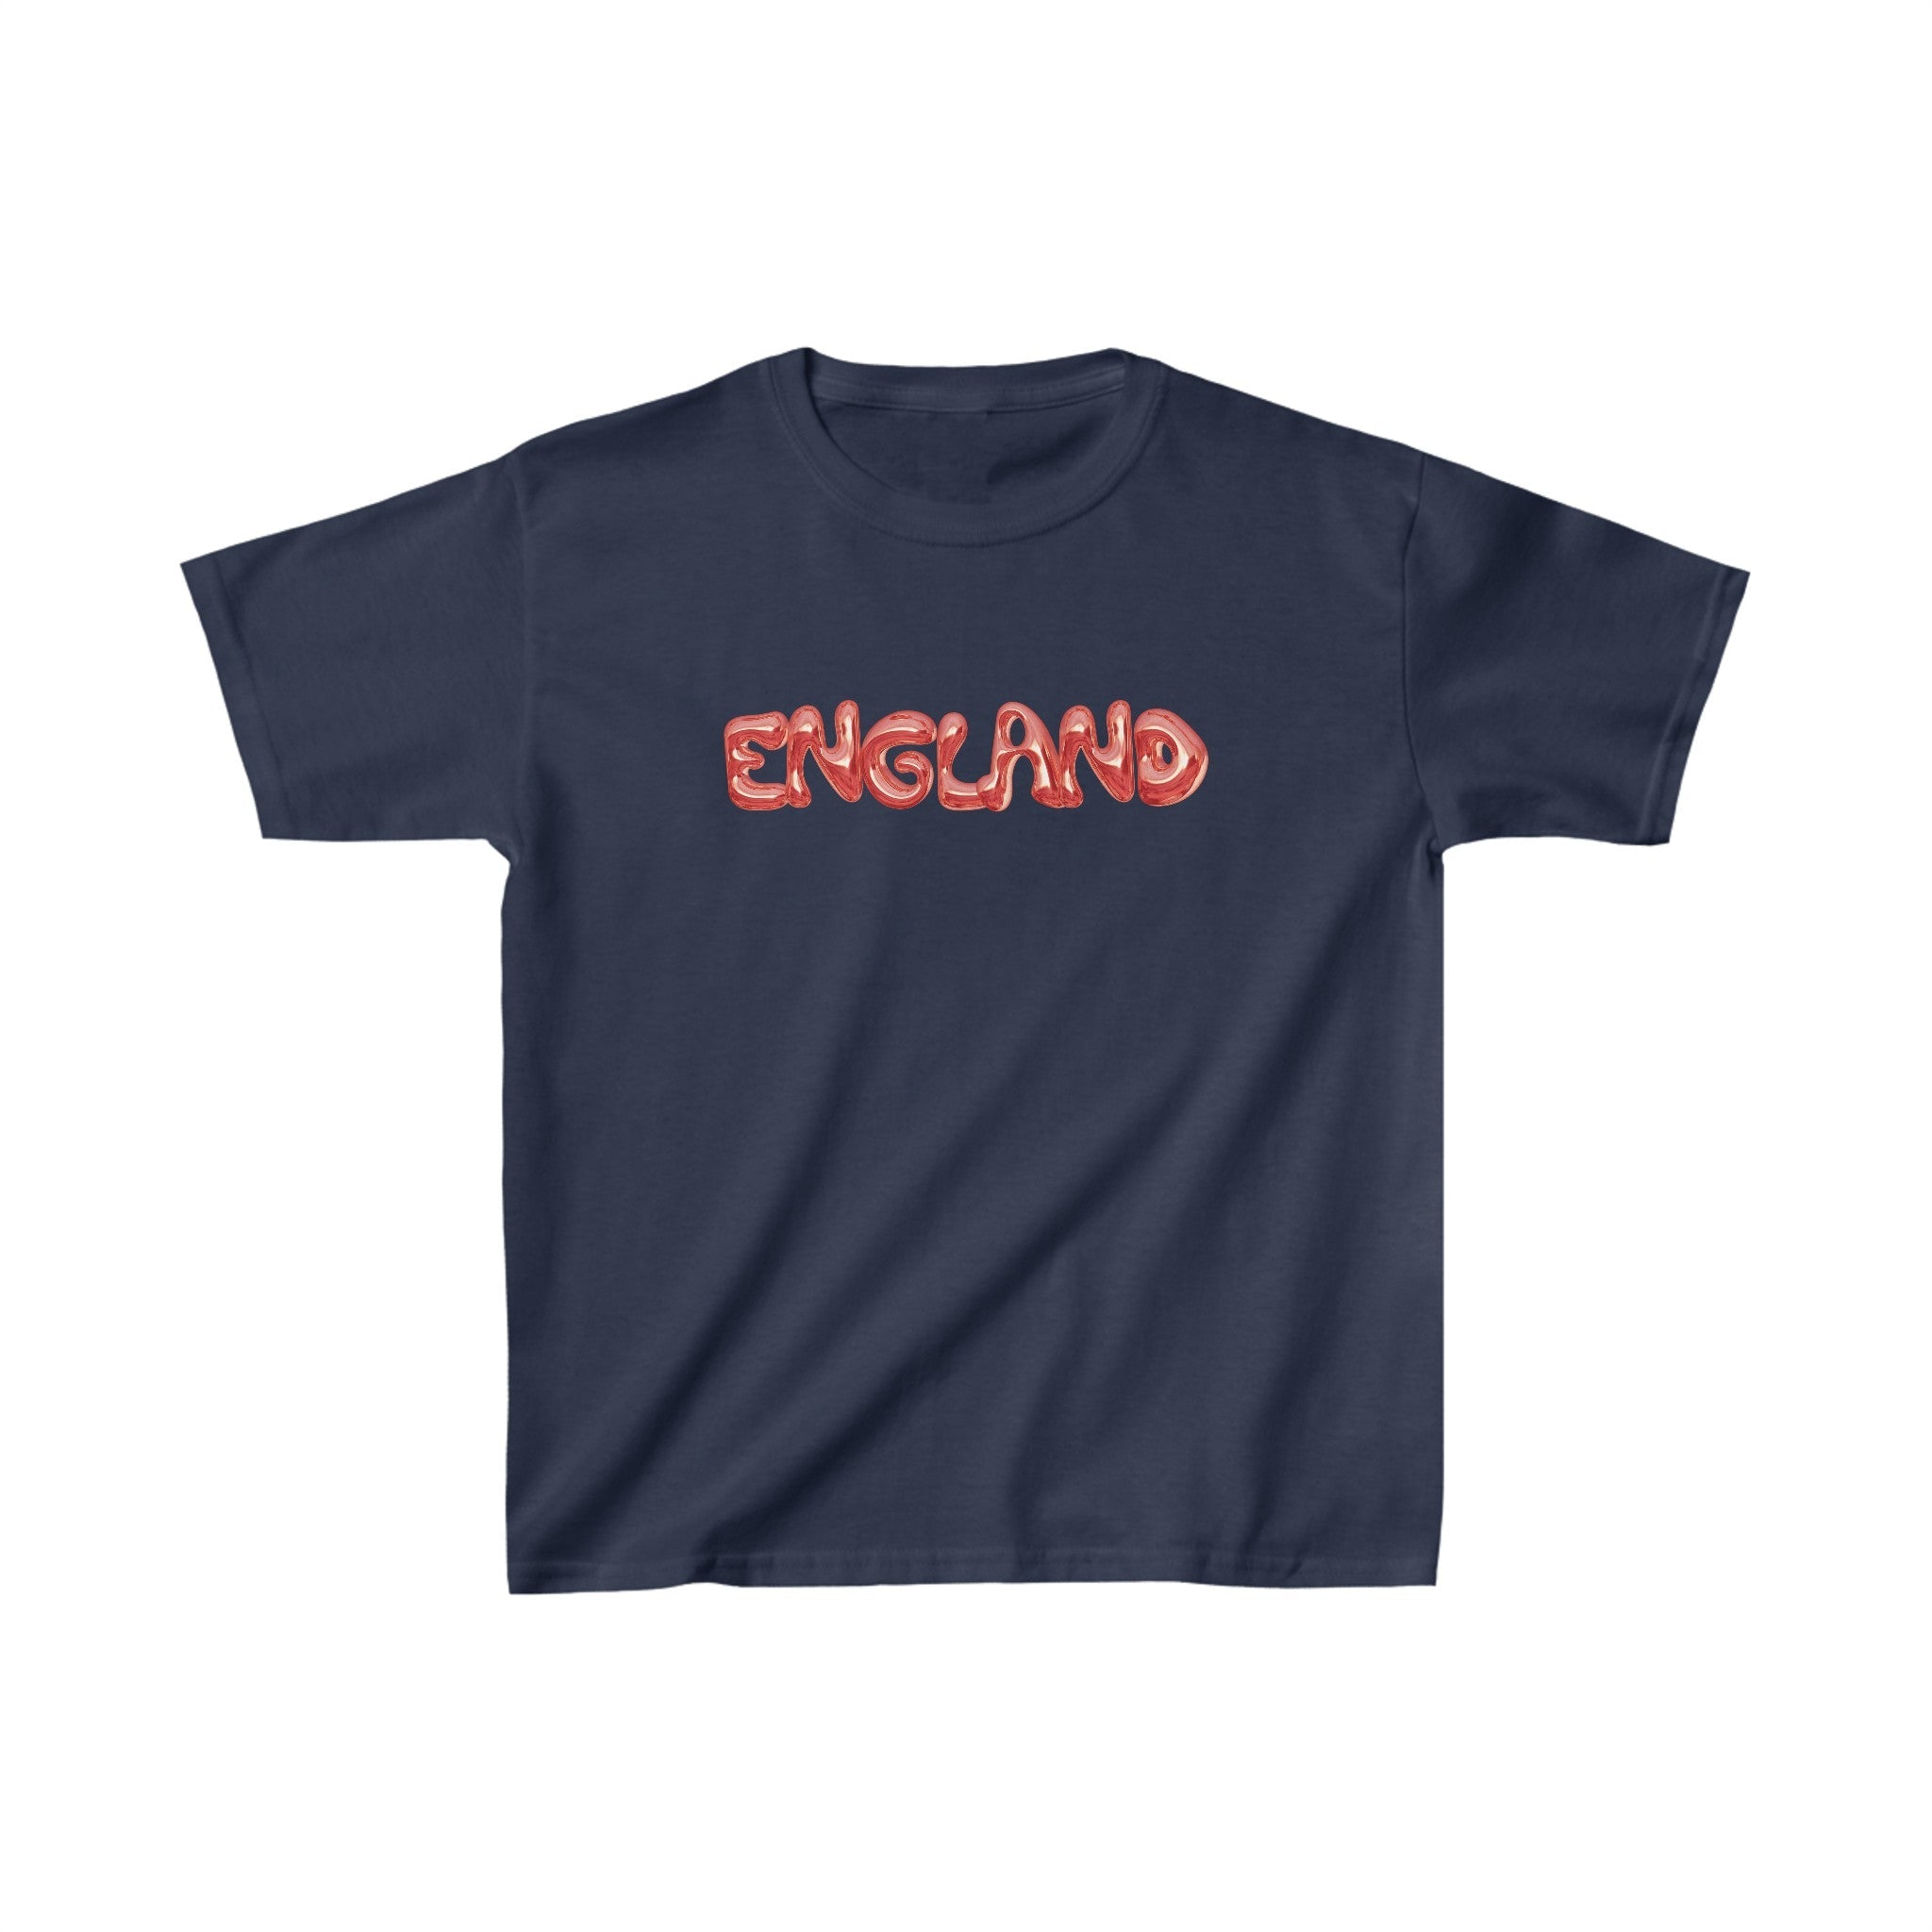 'England' baby tee - In Print We Trust